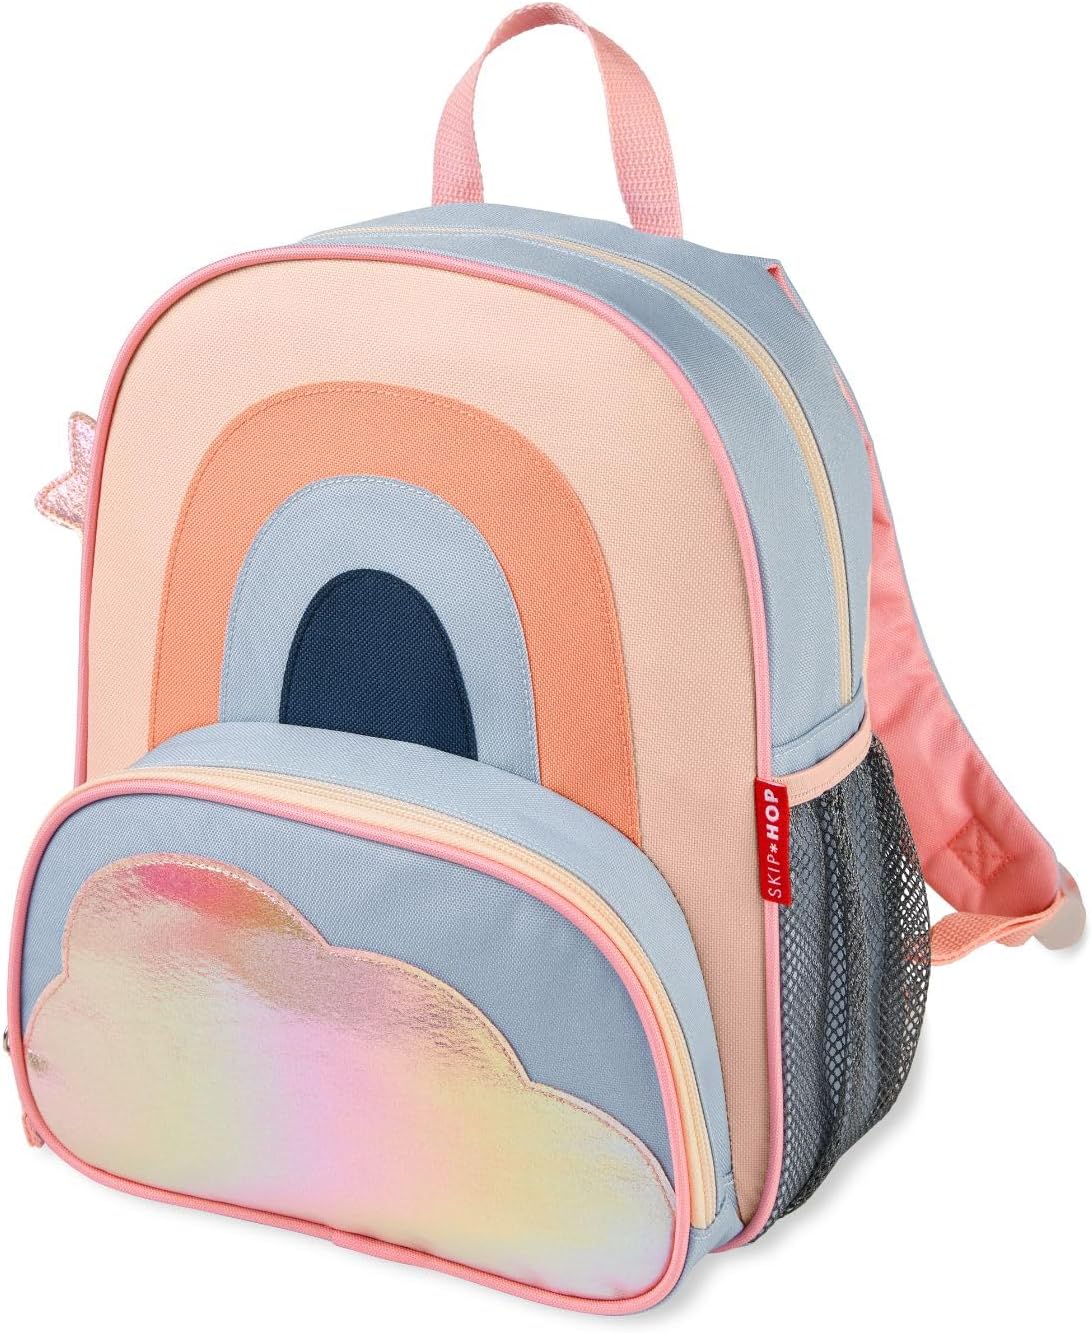 zoo rainbow backpack